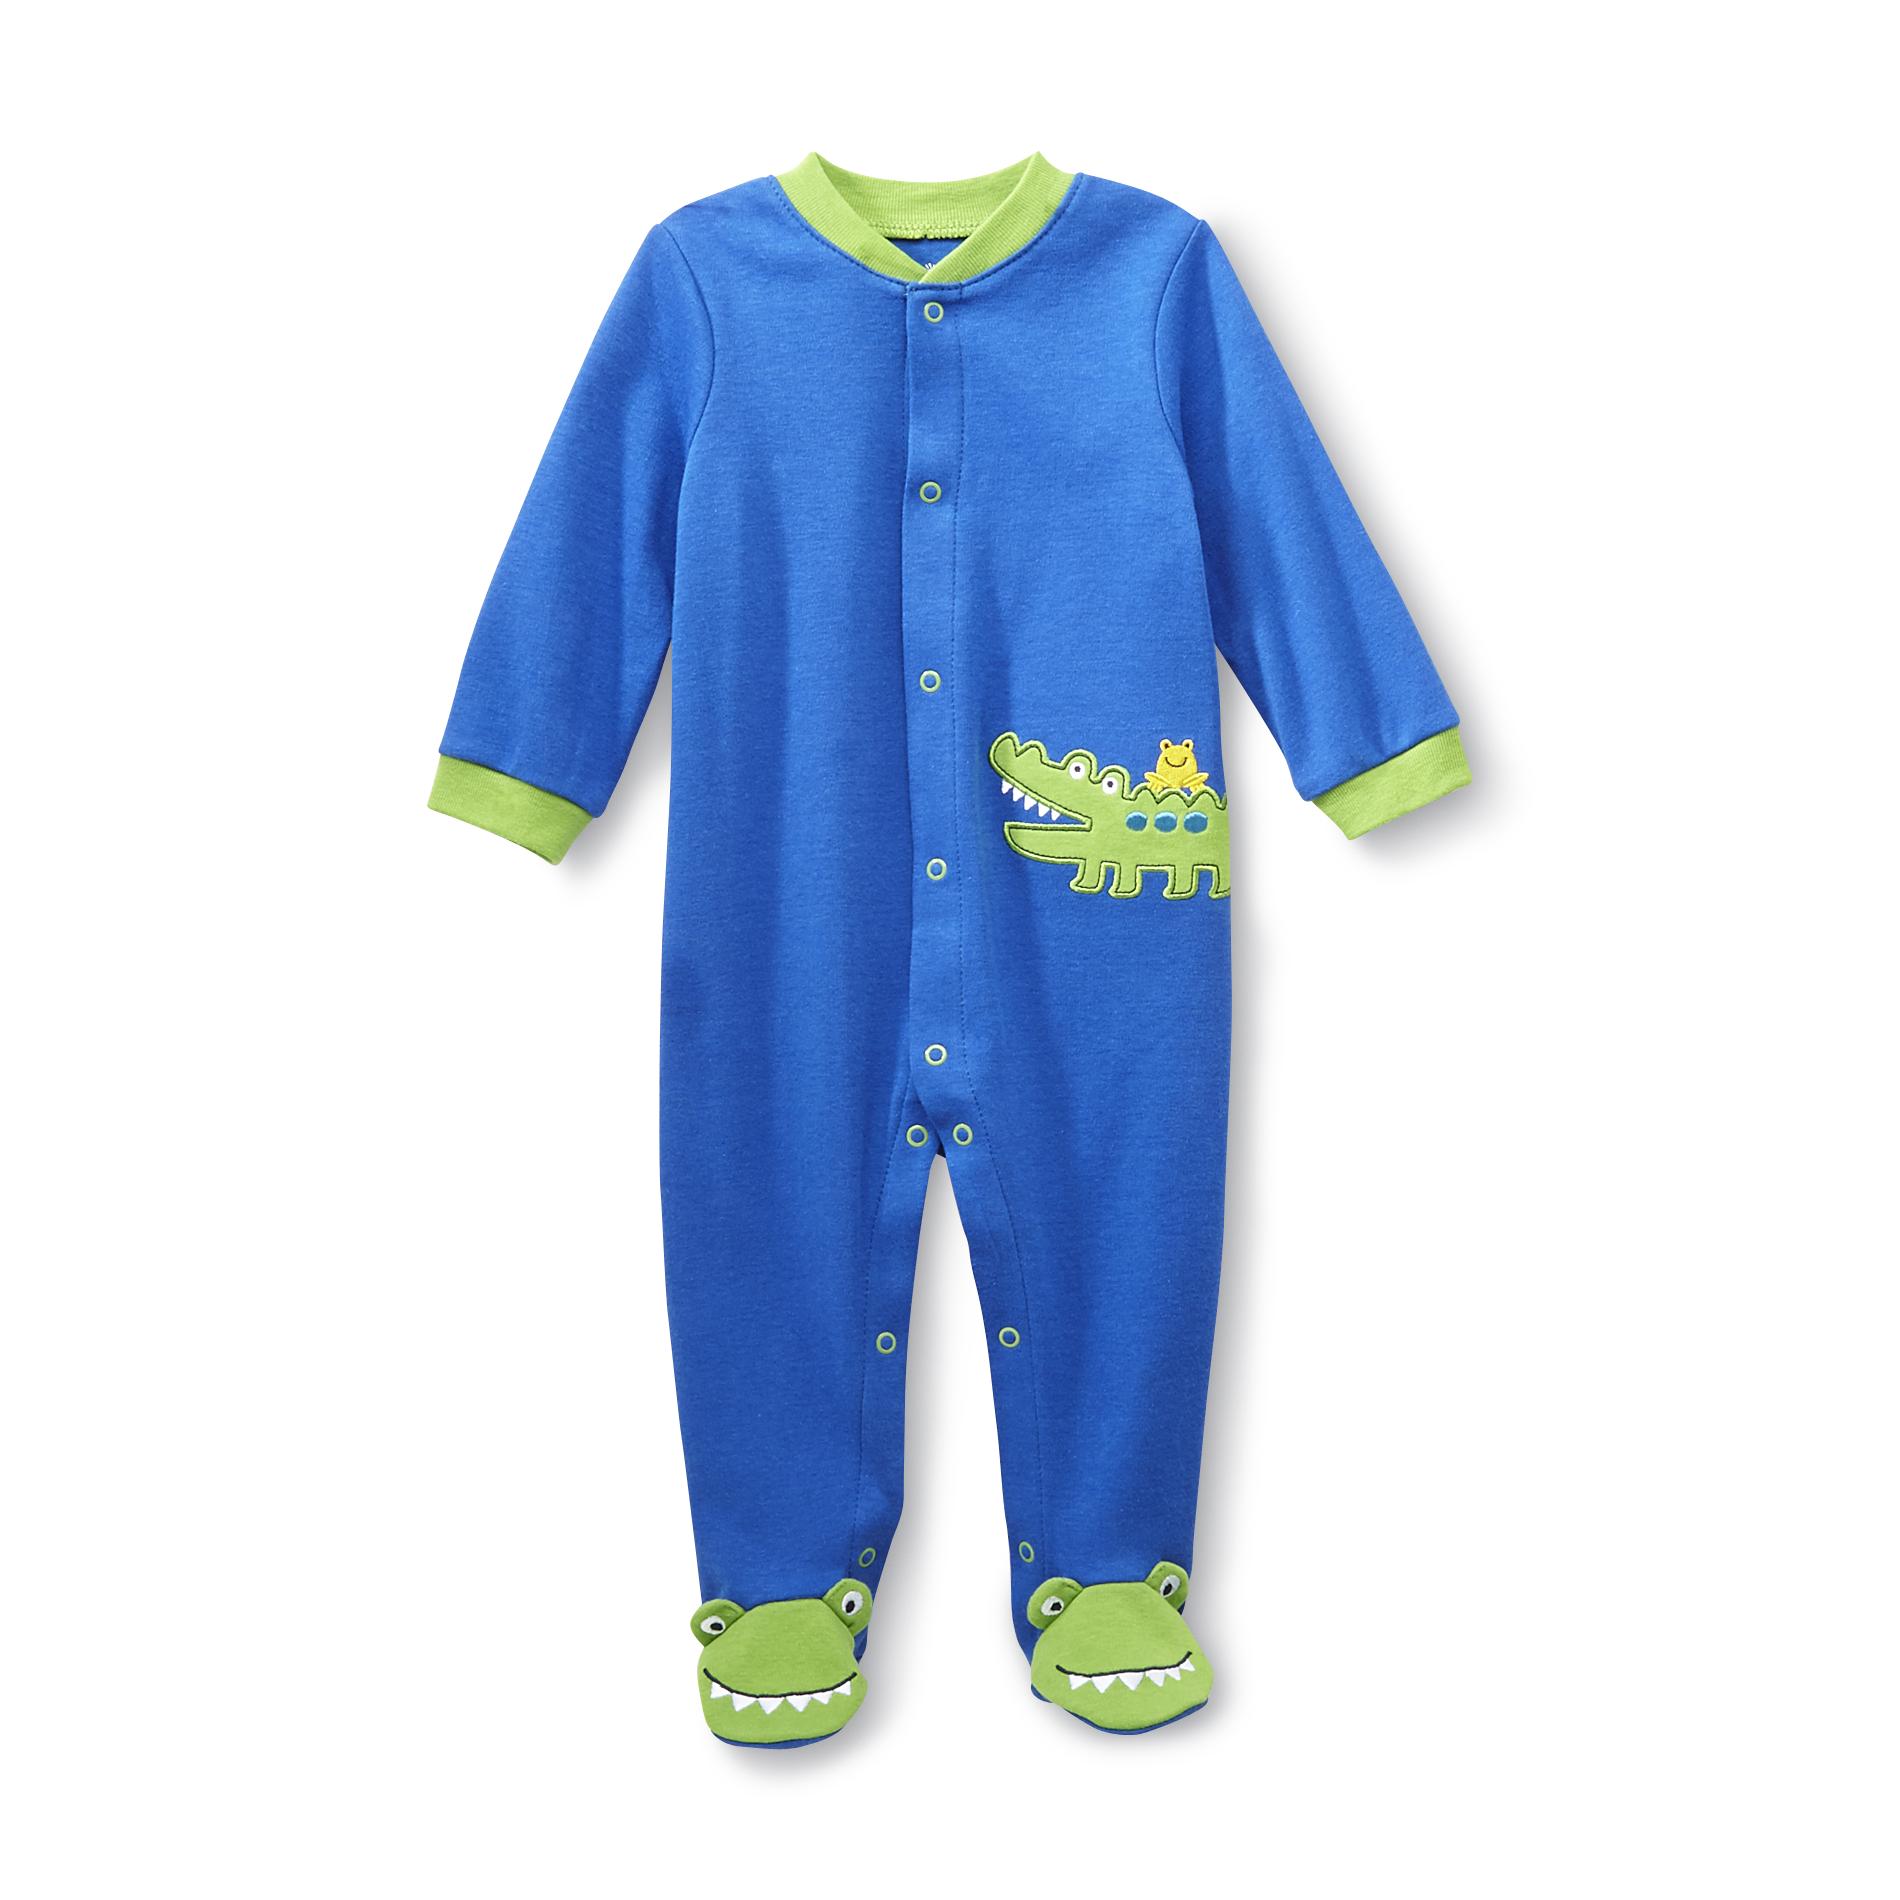 Small Wonders Newborn Boy's Sleeper Pajamas - Alligator